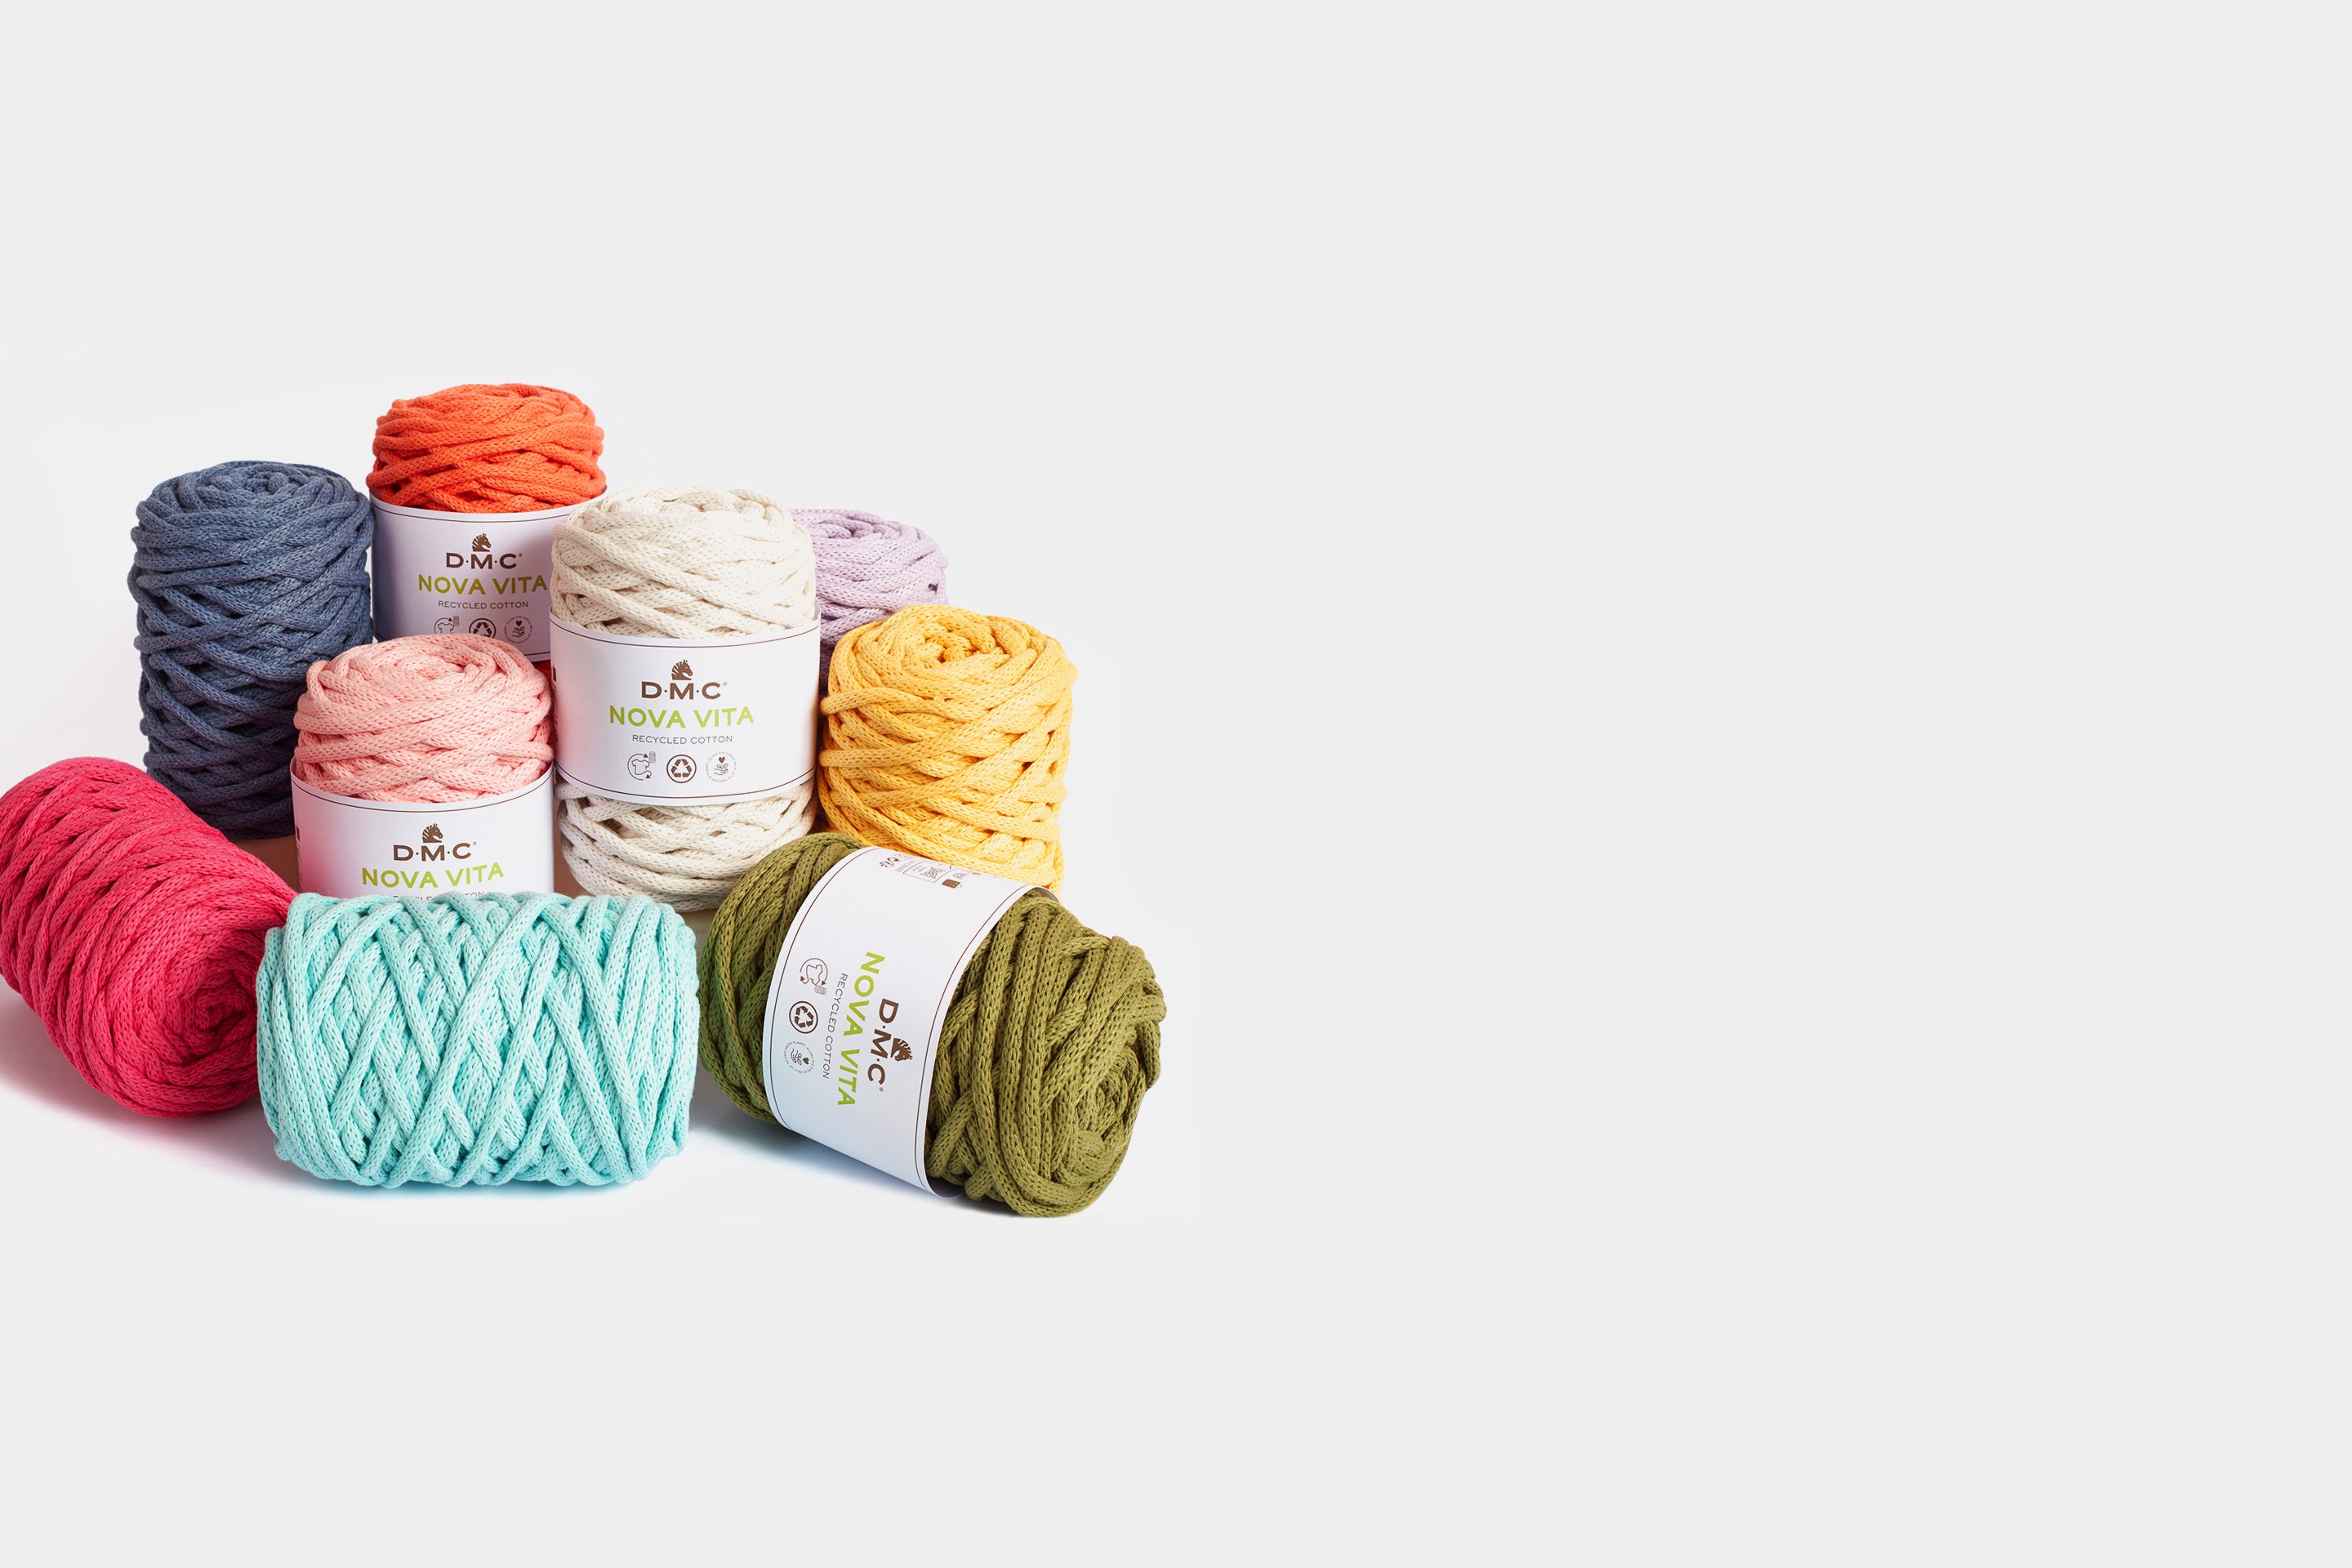 Fil NOVA VITA 12 - Crochet Tricot Macramé 